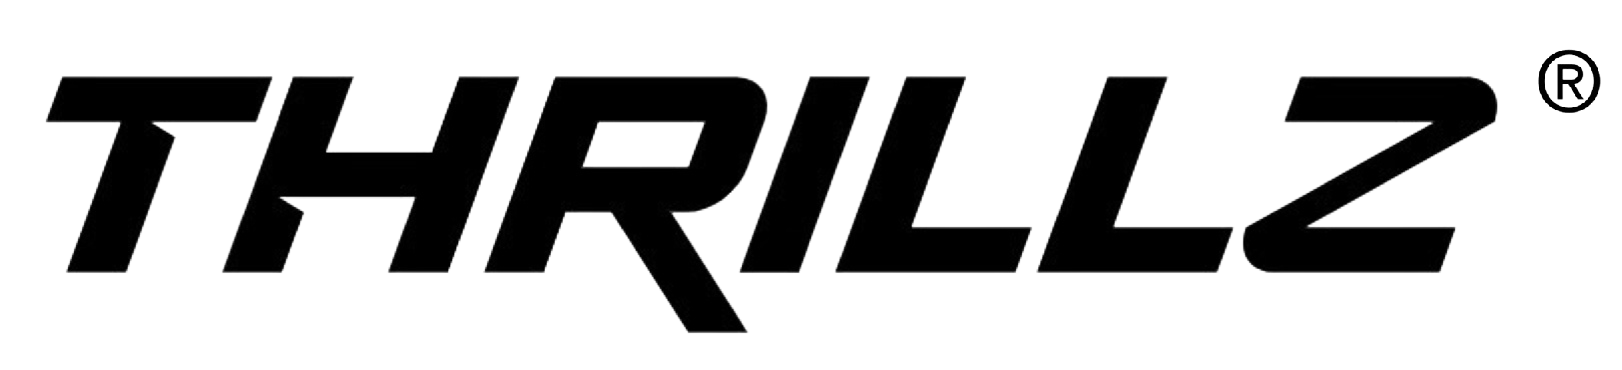 Thrillzclothing logo, black on white